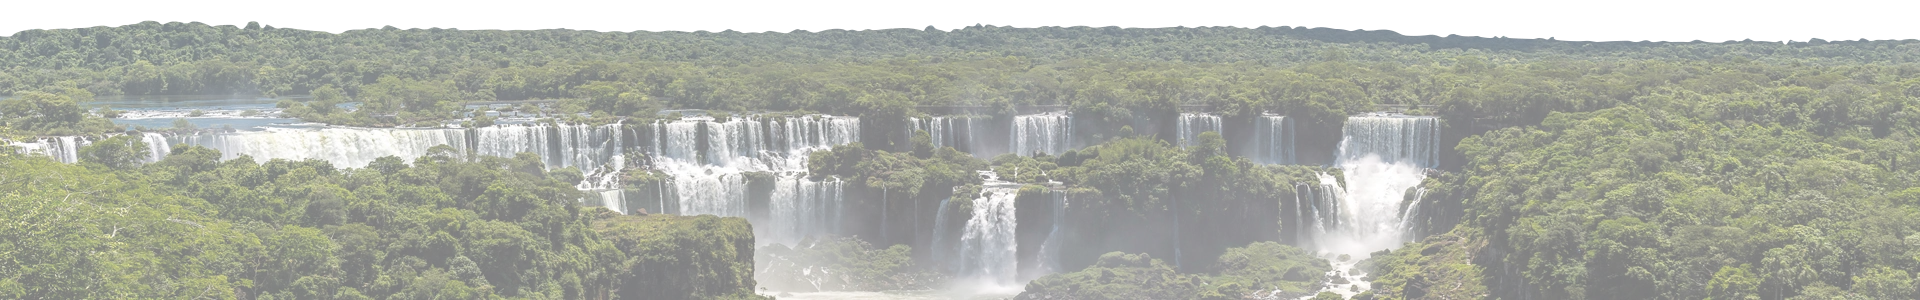 les-chutes-d-Iguacu-1